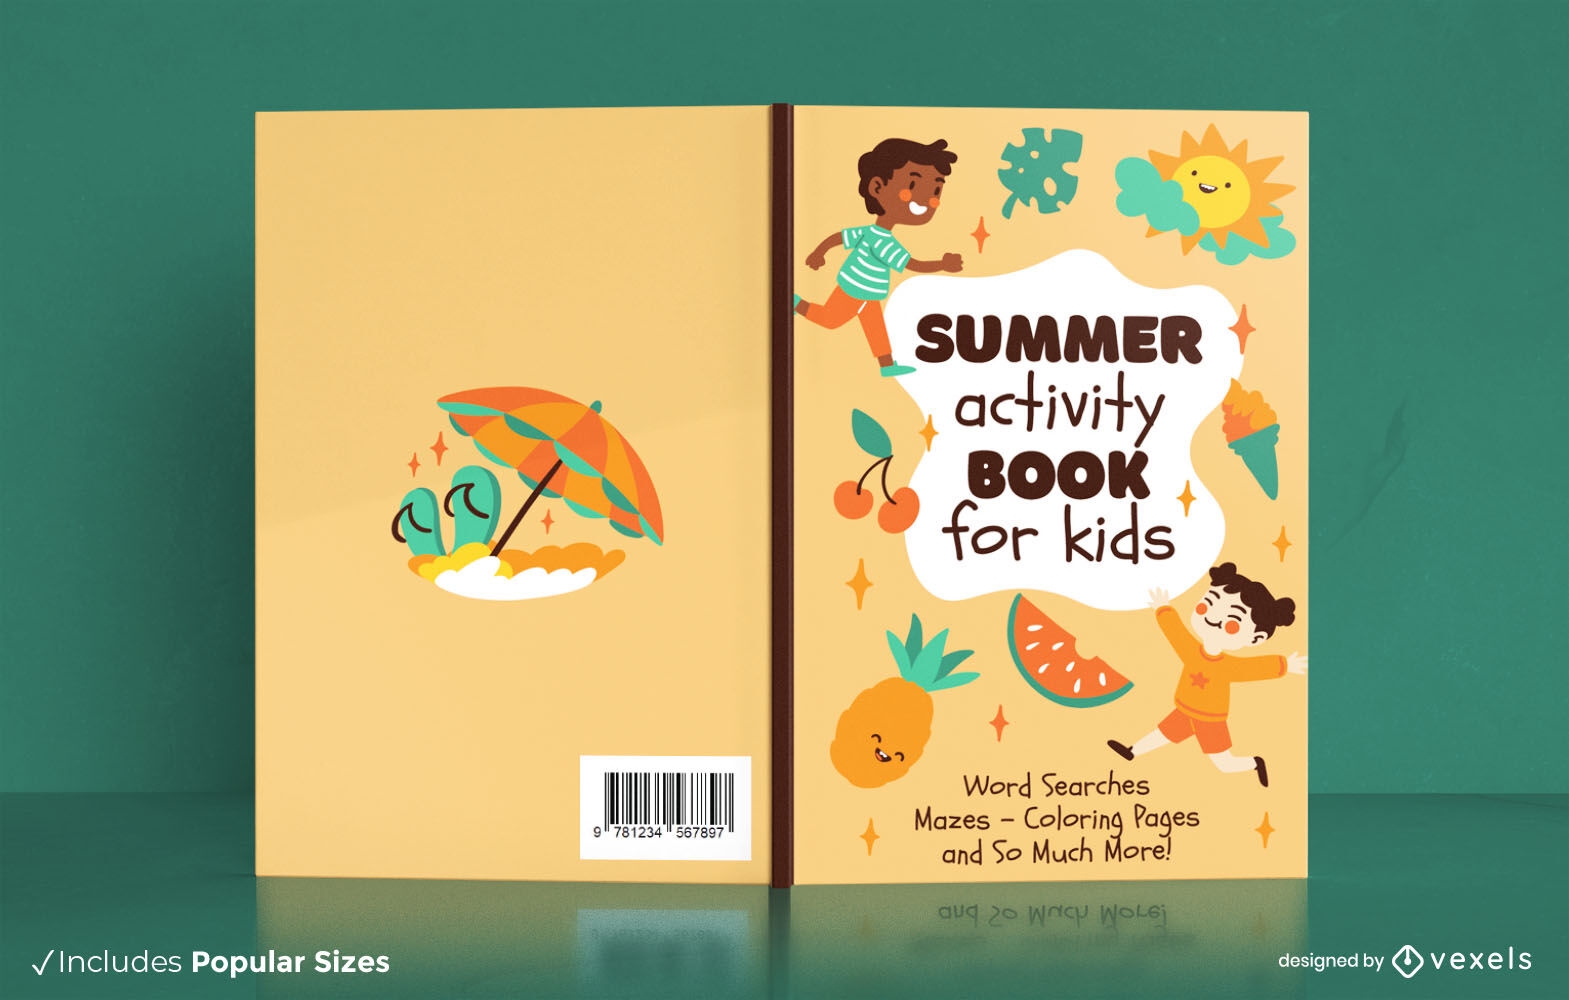 Children in the summer book cover design